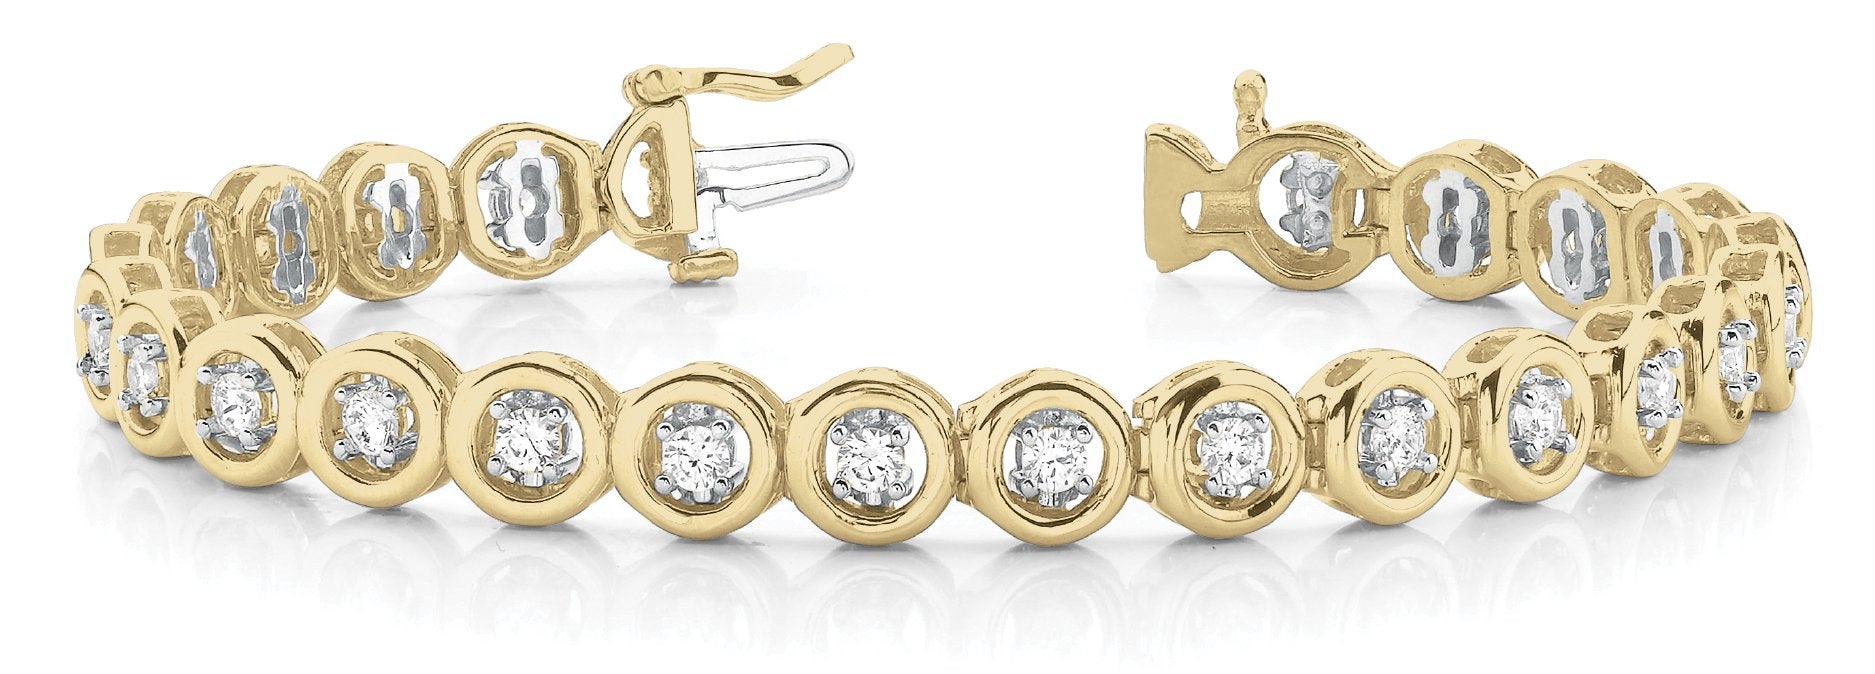 Fancy Diamond Bracelet Ladies 1.19ct tw - 14kt Yellow Gold